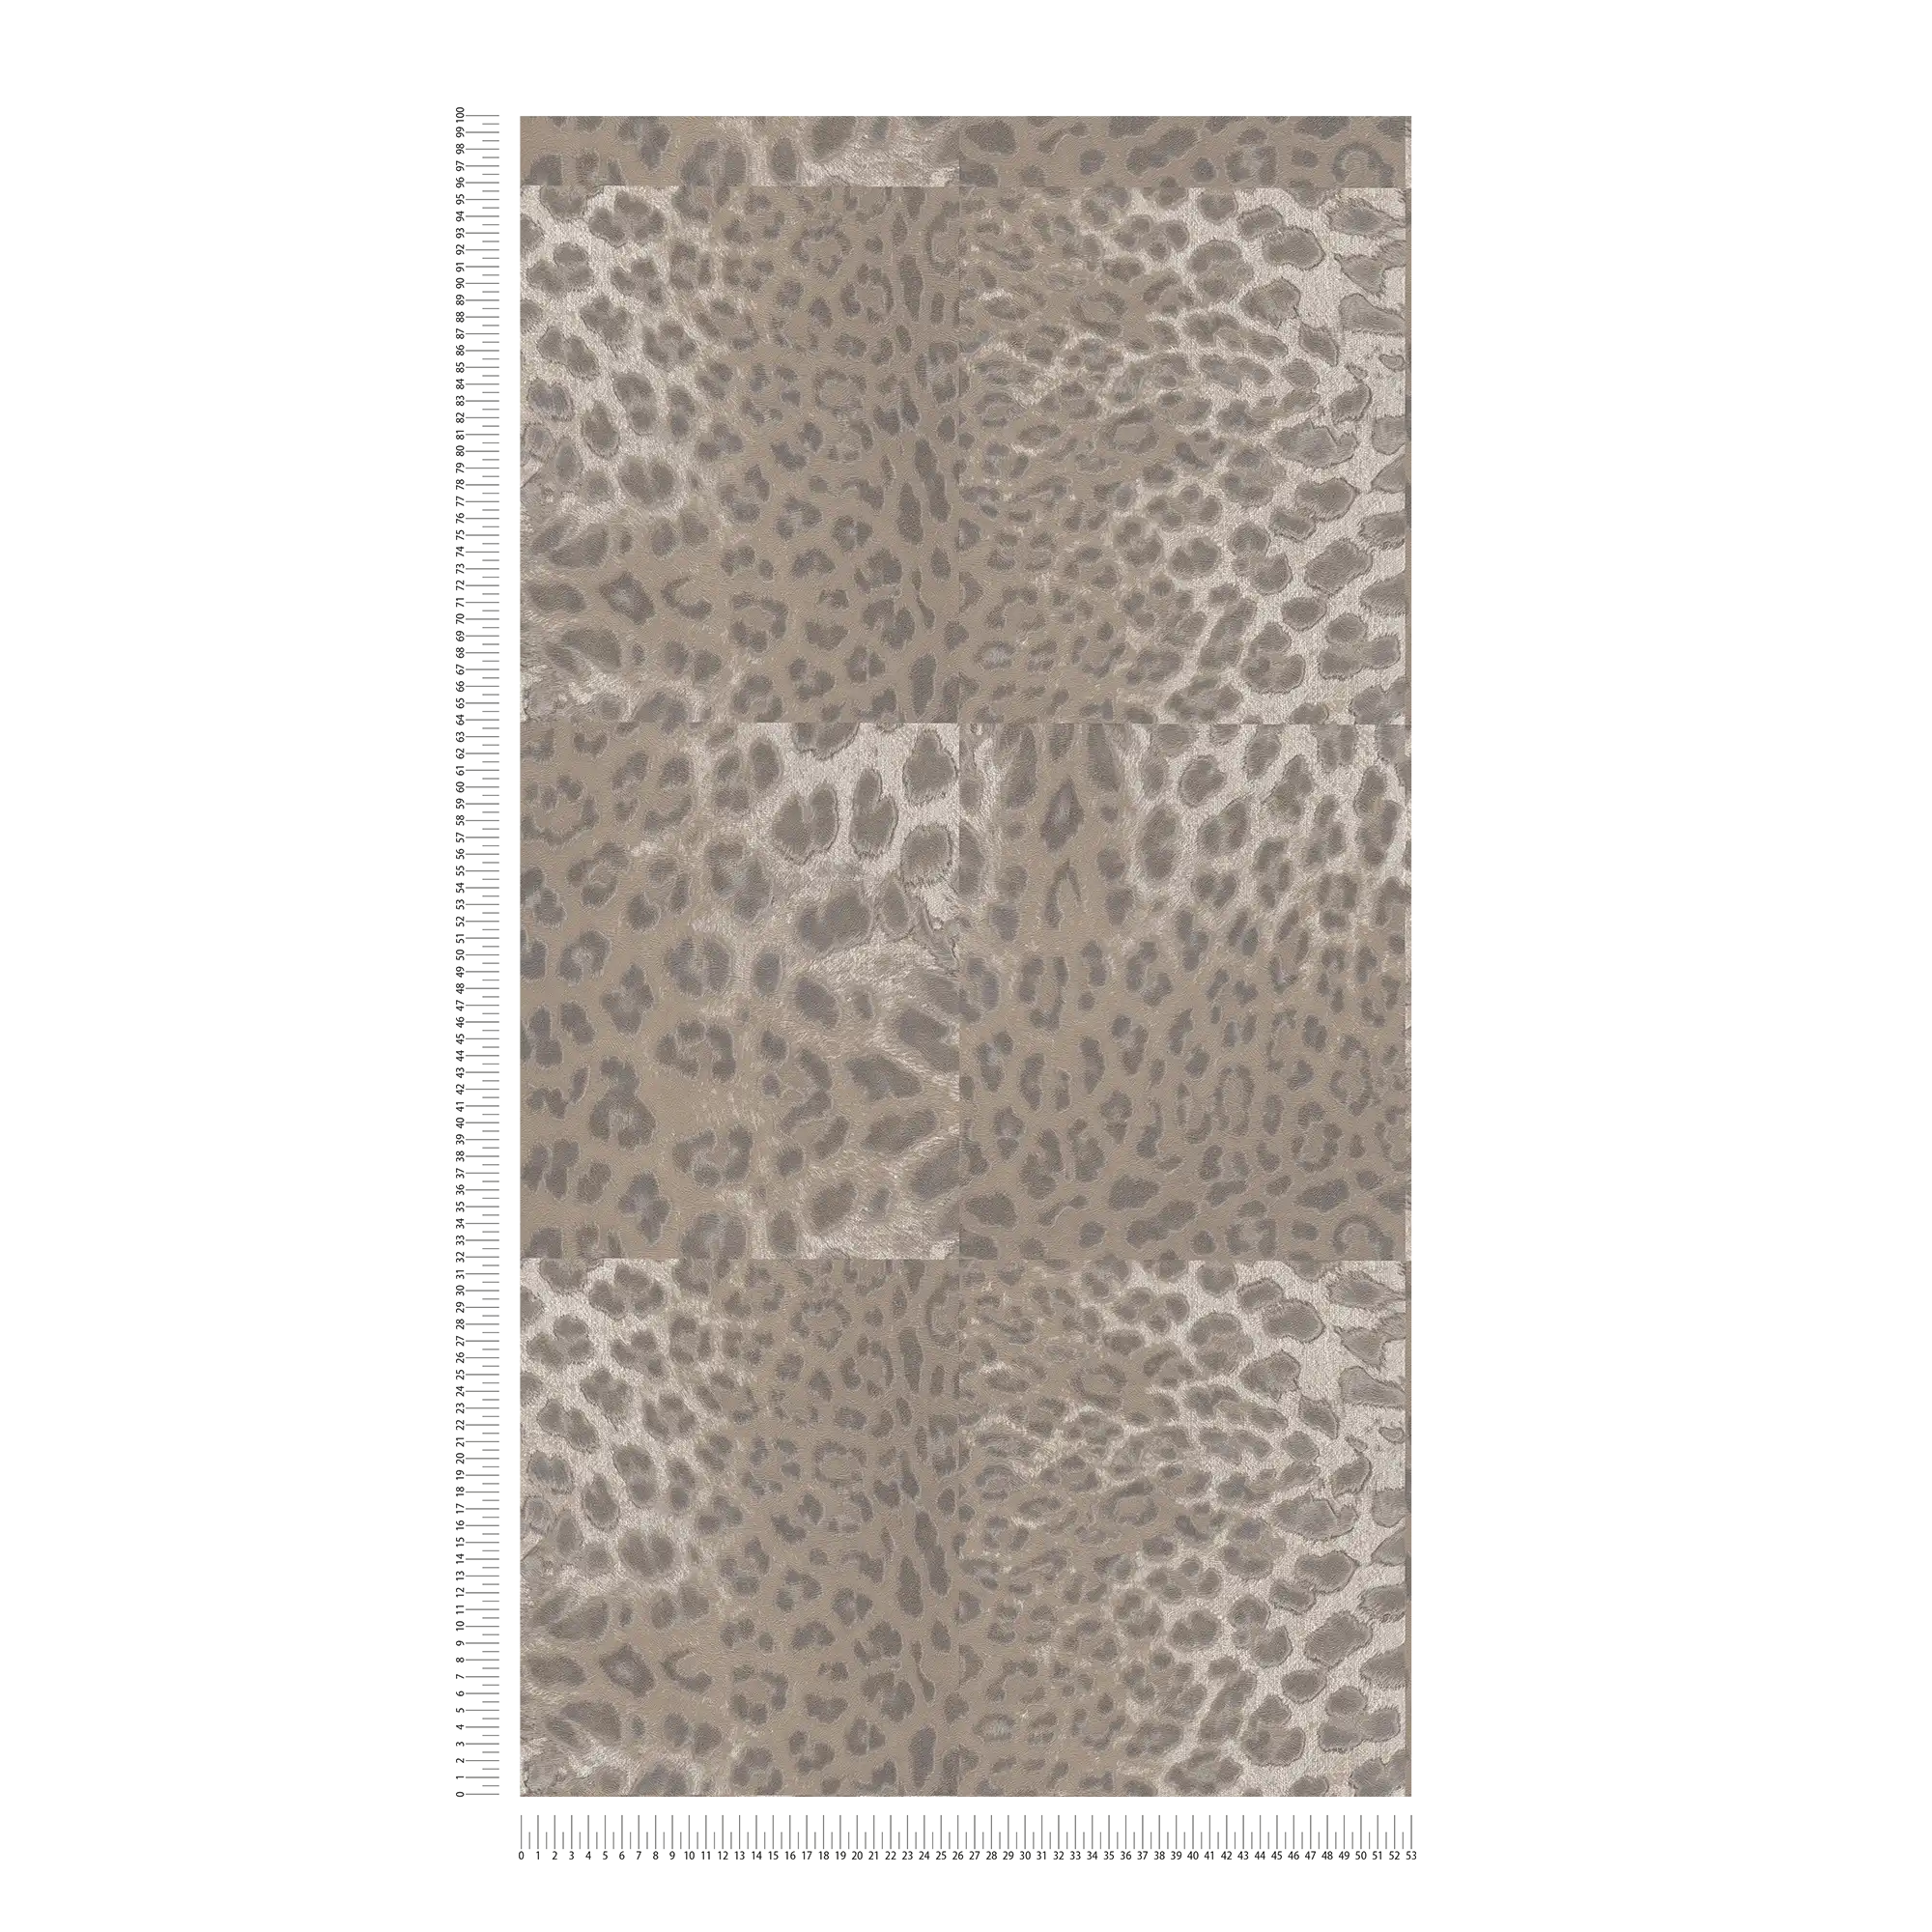             Papier peint Animal Print motif léopard - beige, métallique
        